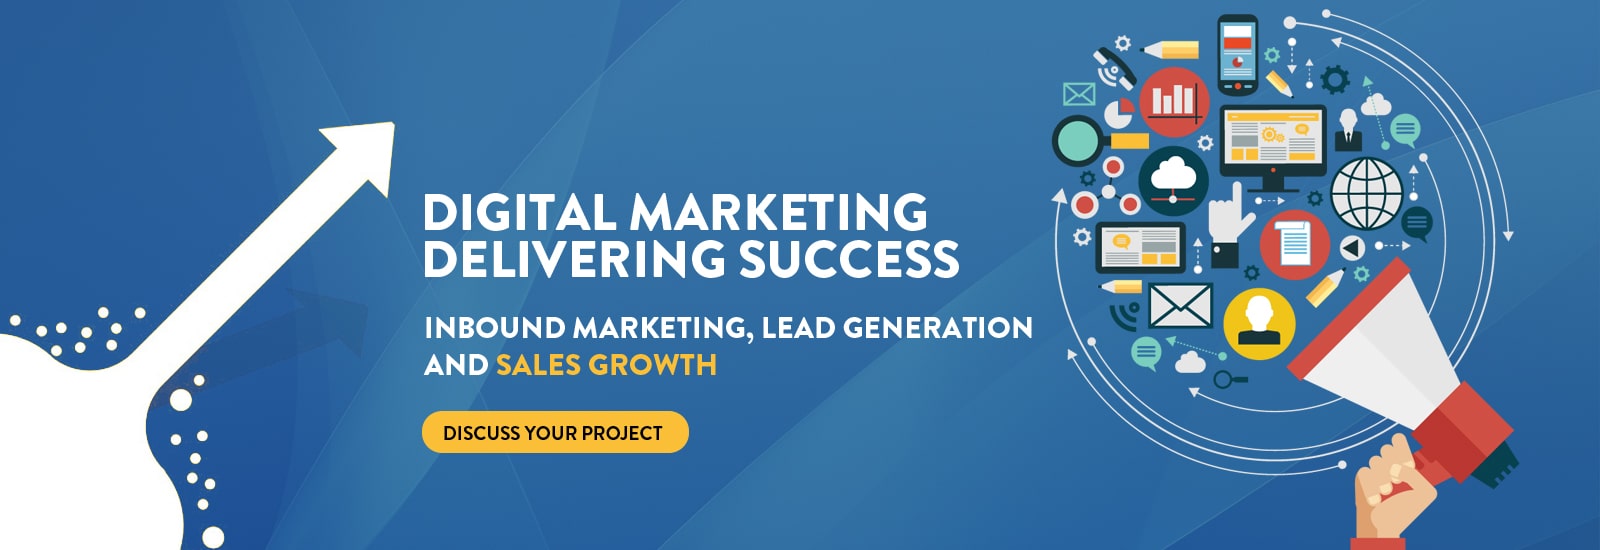 Digital Marketing Company in Pakistan